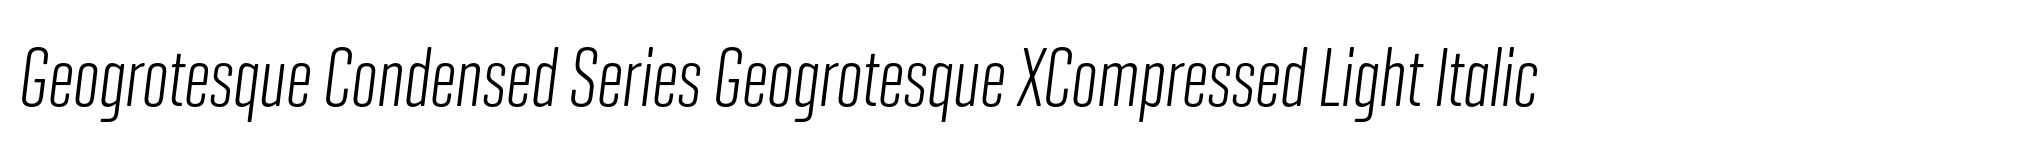 Geogrotesque Condensed Series Geogrotesque XCompressed Light Italic image